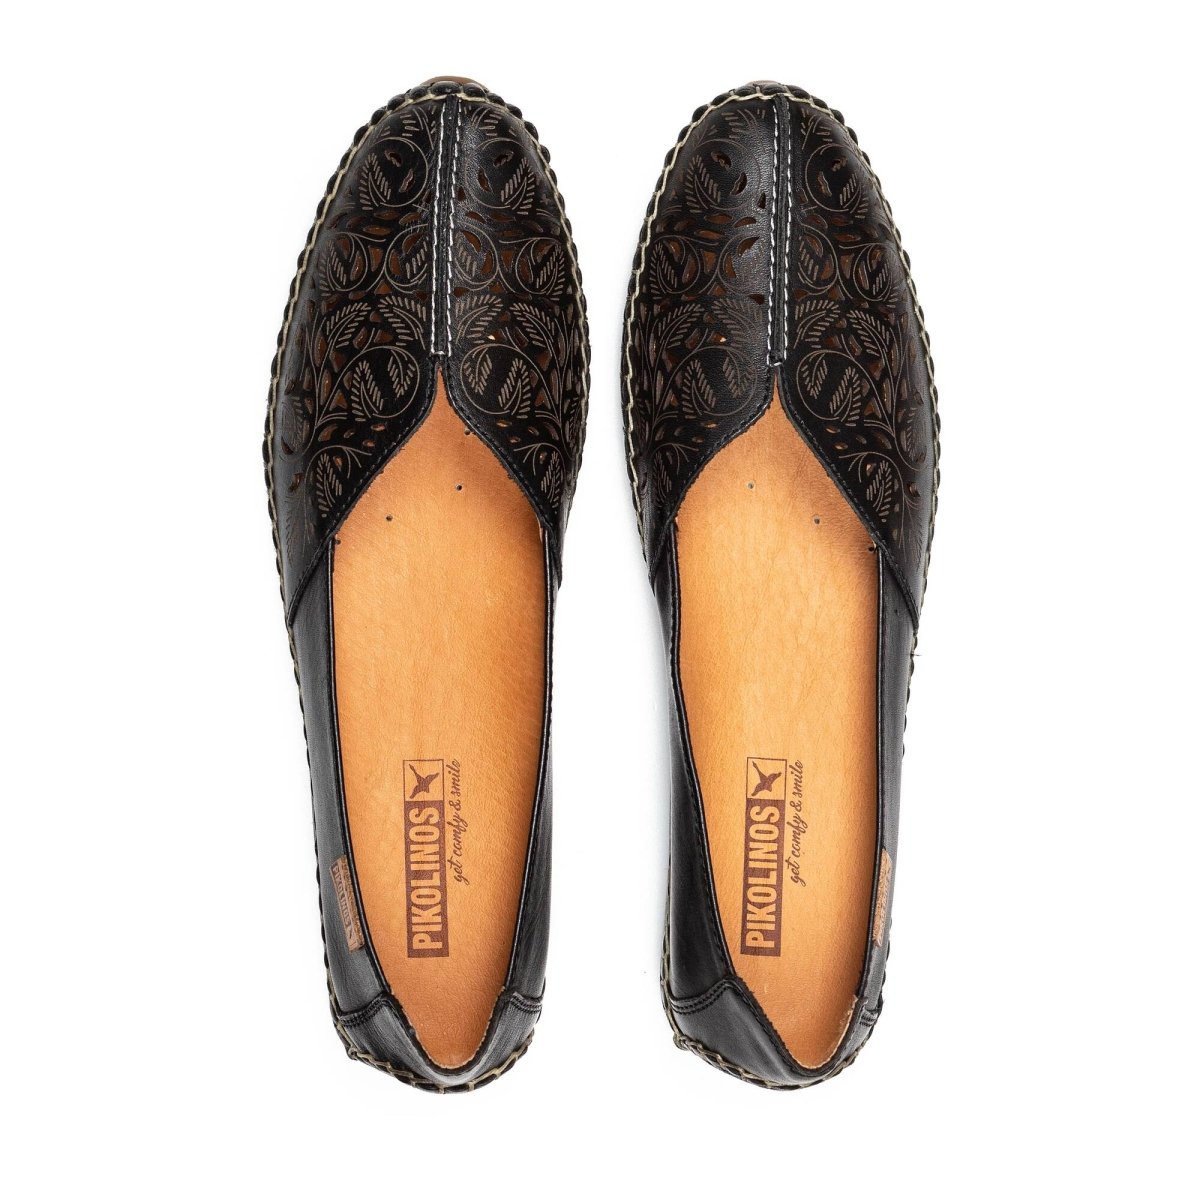 PIKOLINOS JEREZ 578-4976 WOMEN'S LOAFERS SLIP-ON SLIPPER SHOES IN BLACK - TLW Shoes